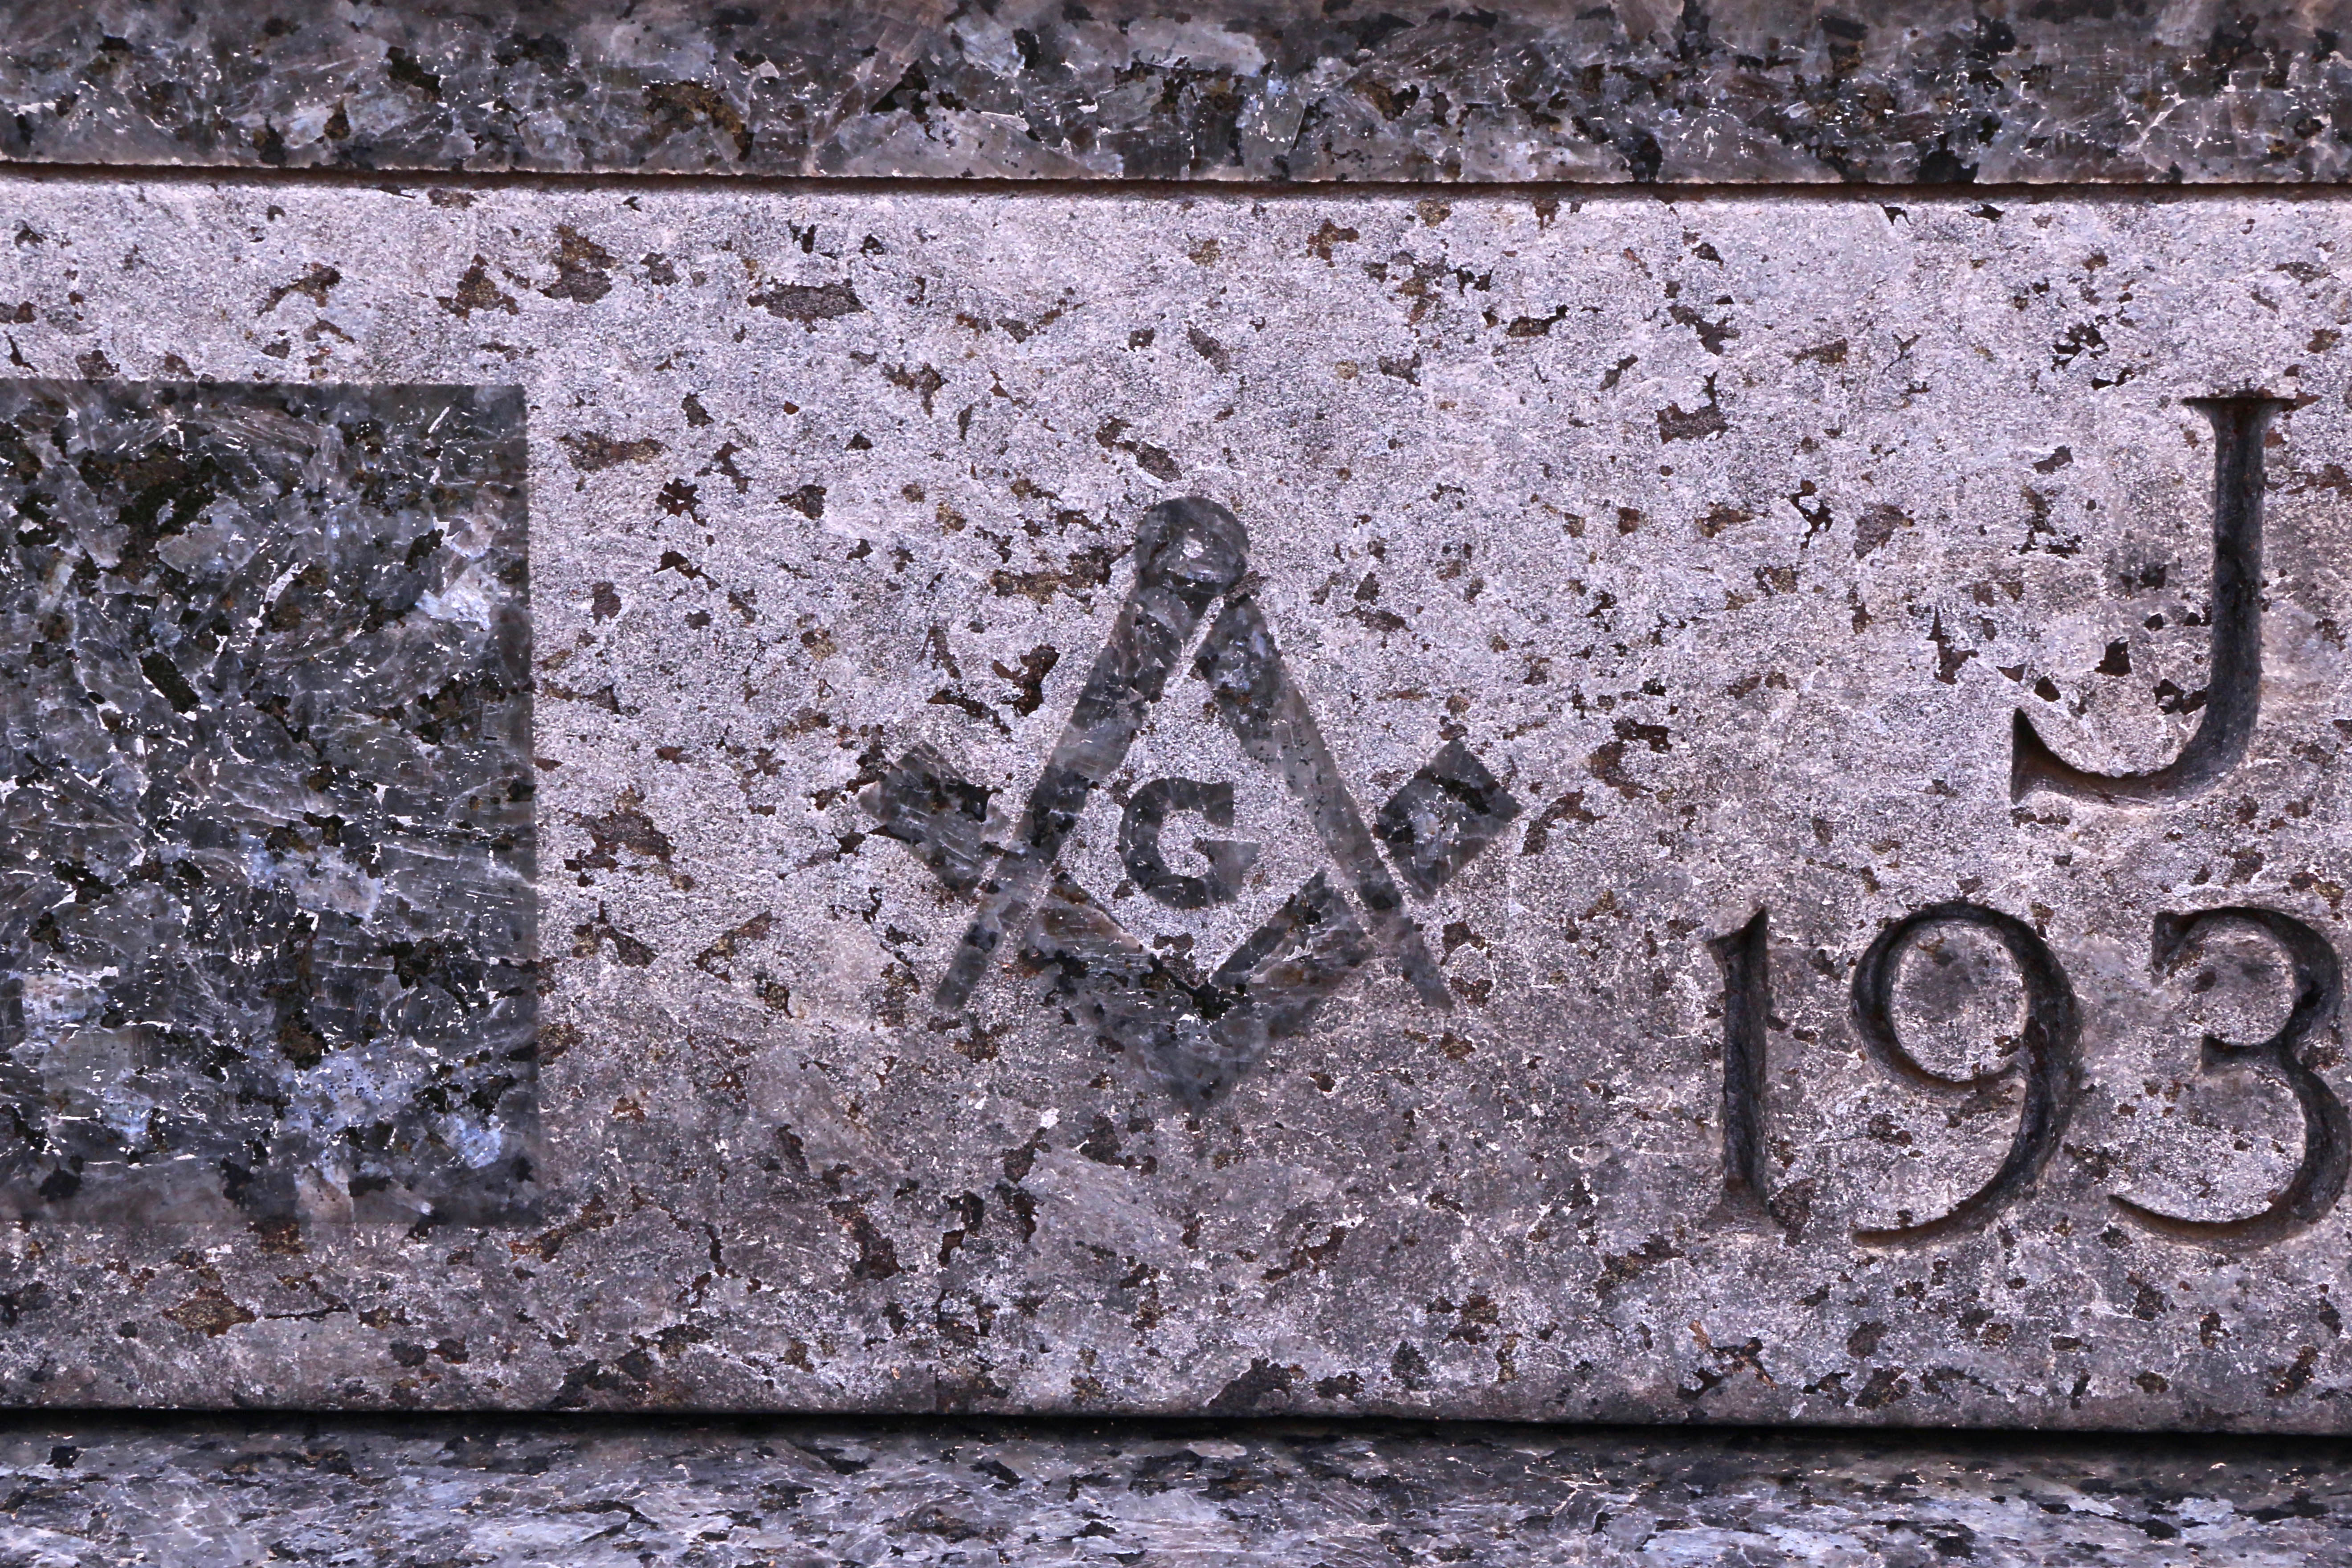 Headstone close-up - Freemason